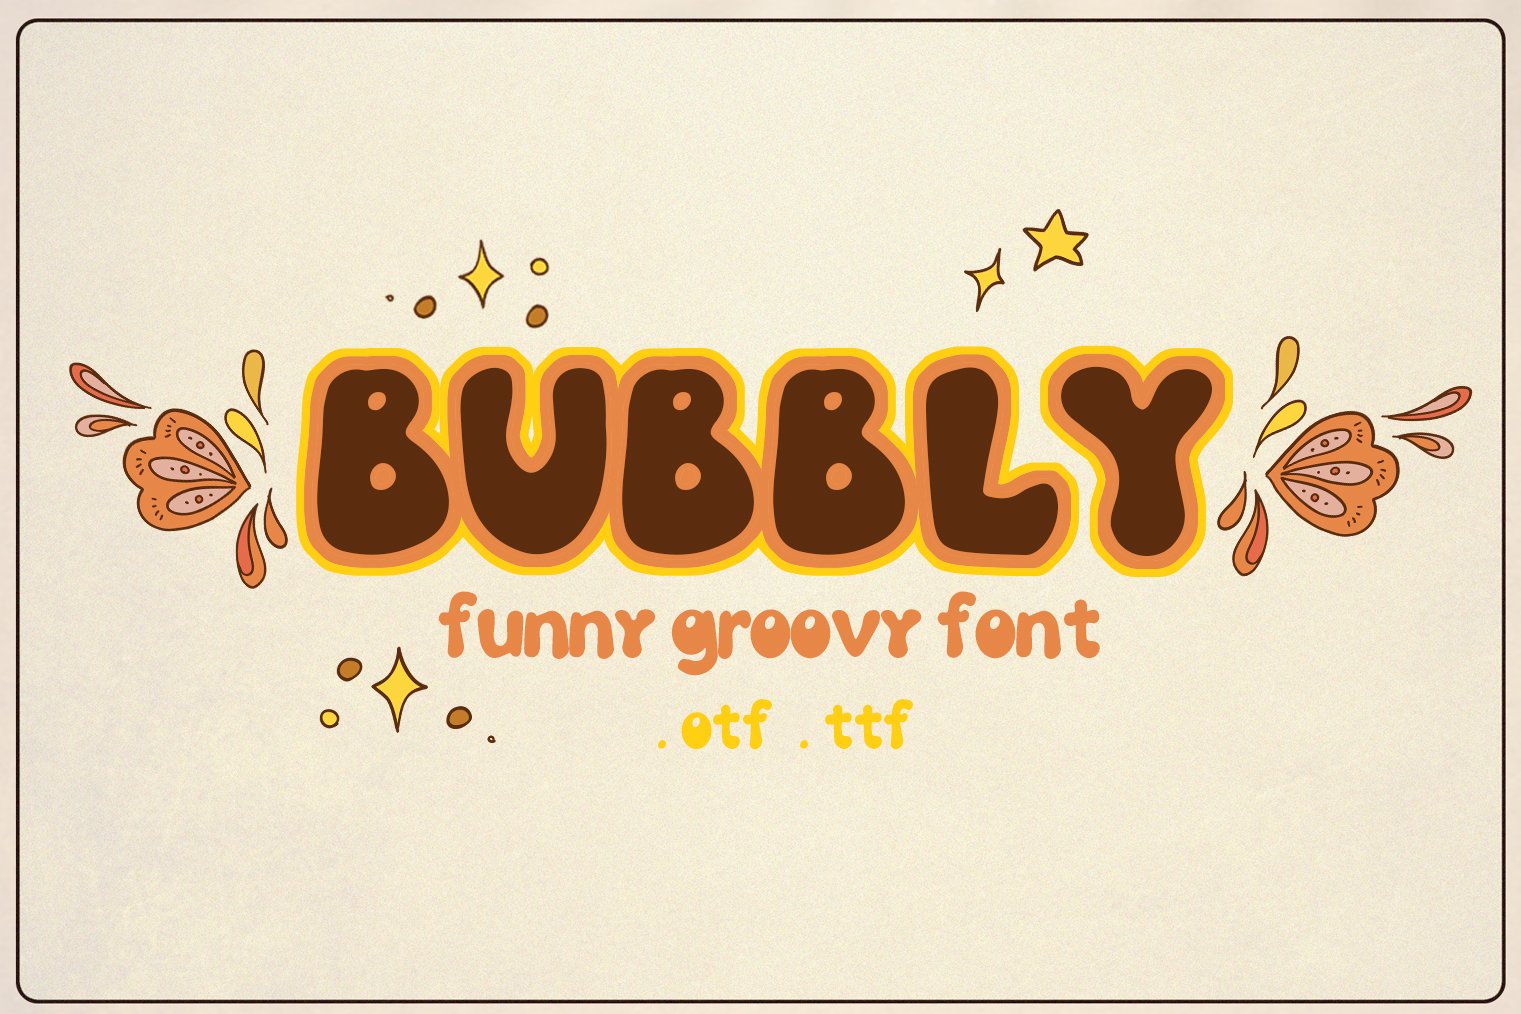 Bubbly Retro font cover image.